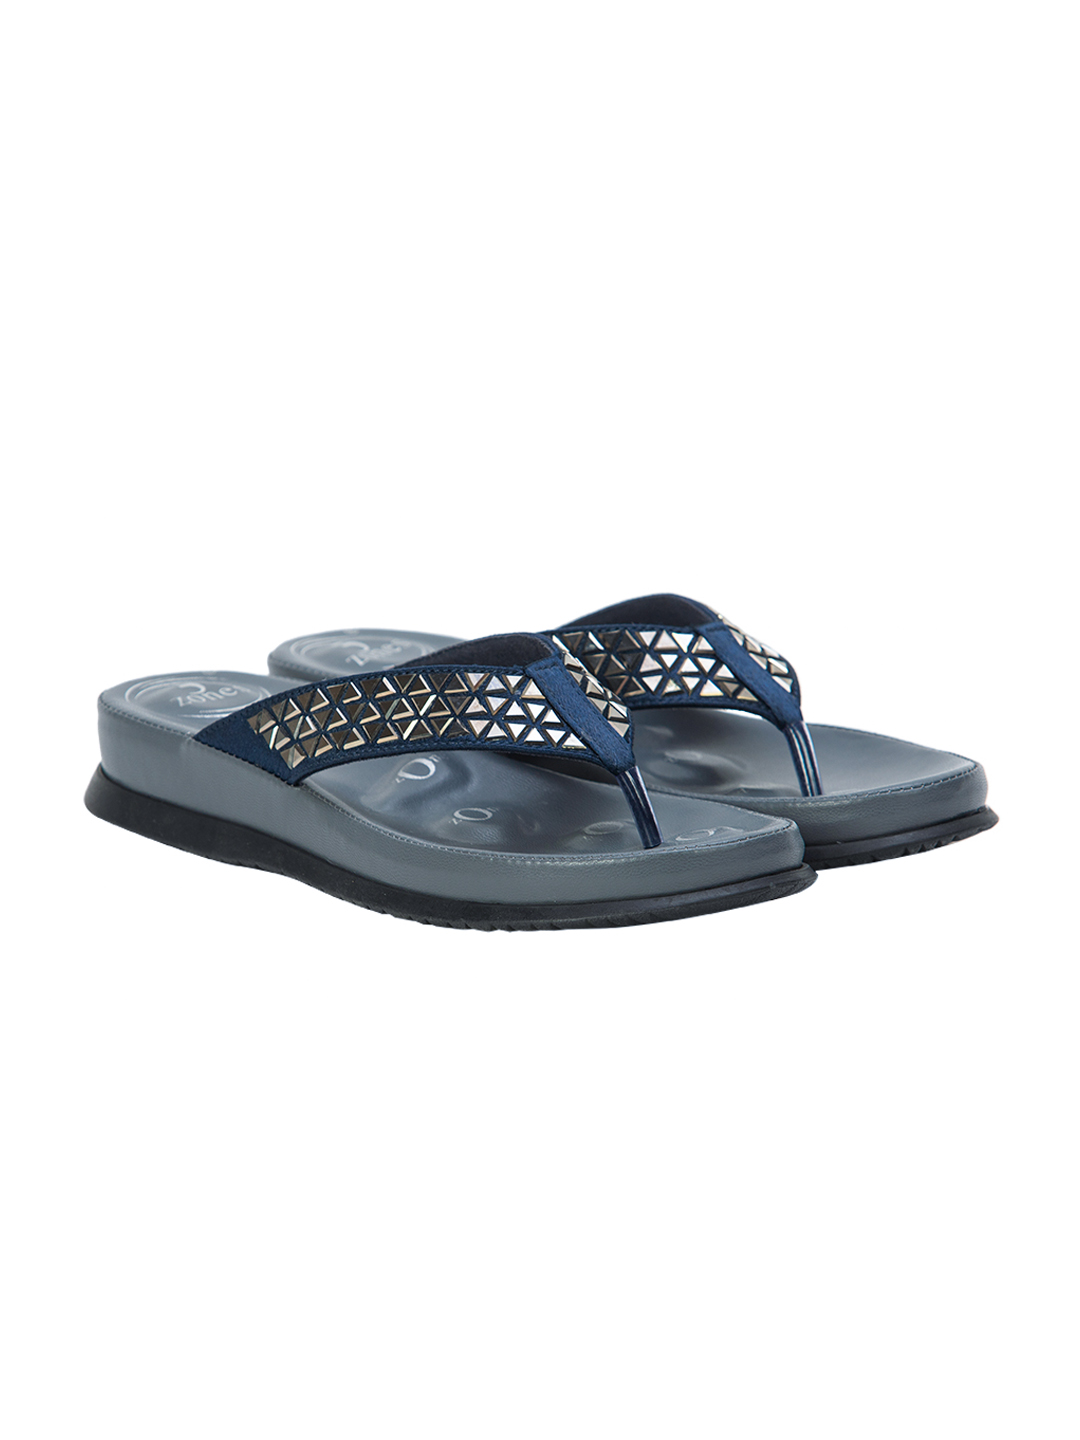 Buy Von Wellx Germany Comfort Beam Blue Slippers Online in West Bengal